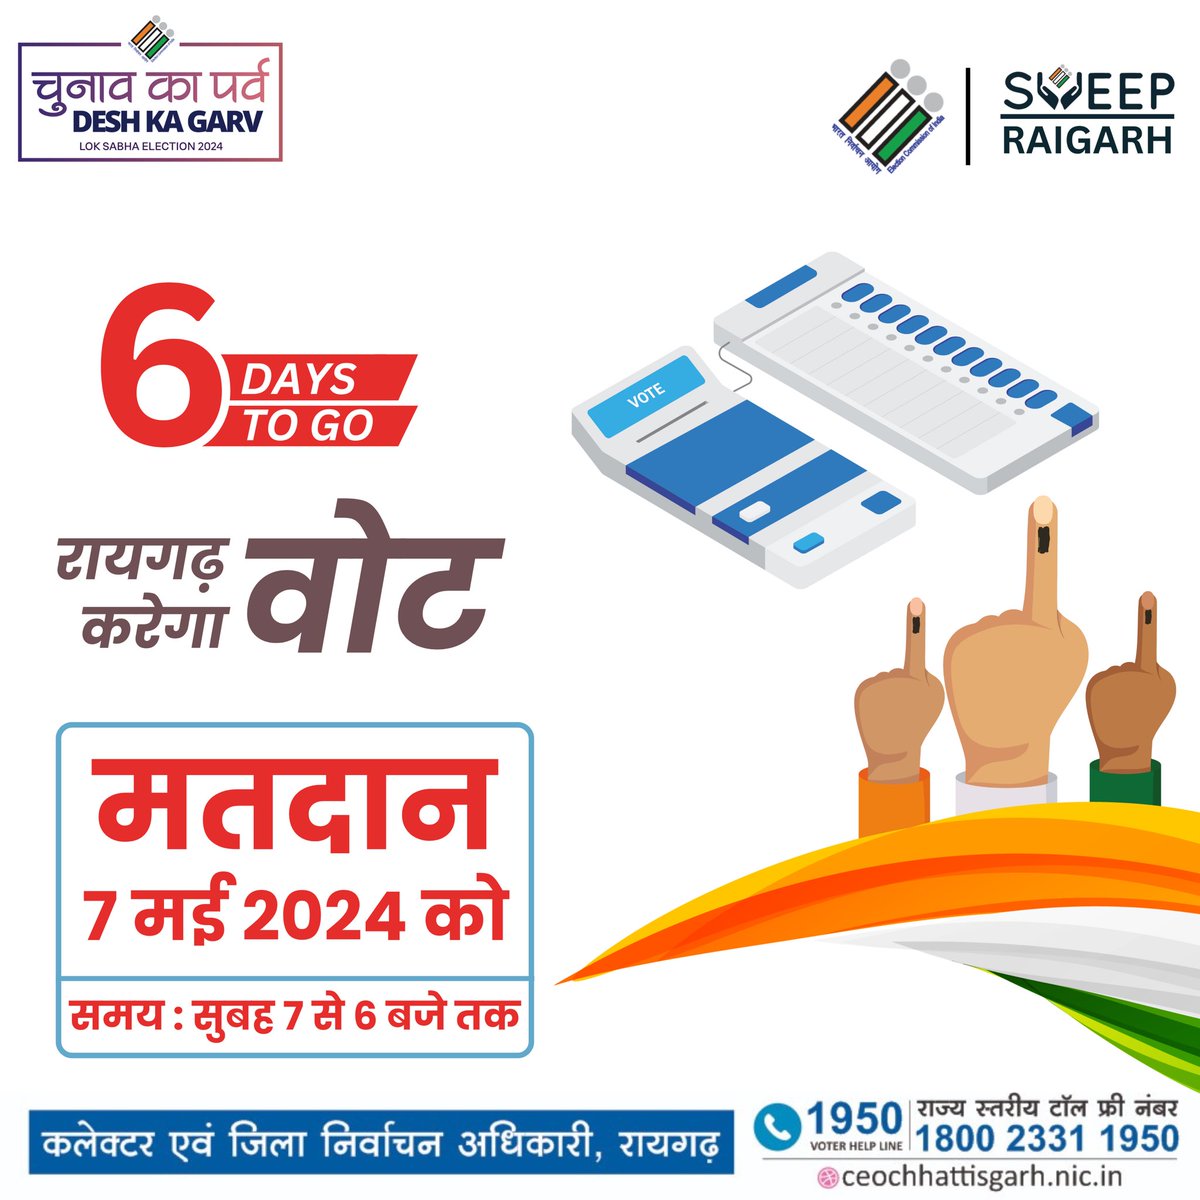 6…. Days to Go 7 मई 2024 को रायगढ़ करेगा मतदान @ECISVEEP @CEOChhattisgarh #Elections2024 #ChunavKaParv #DeshKaGarv #raigarh